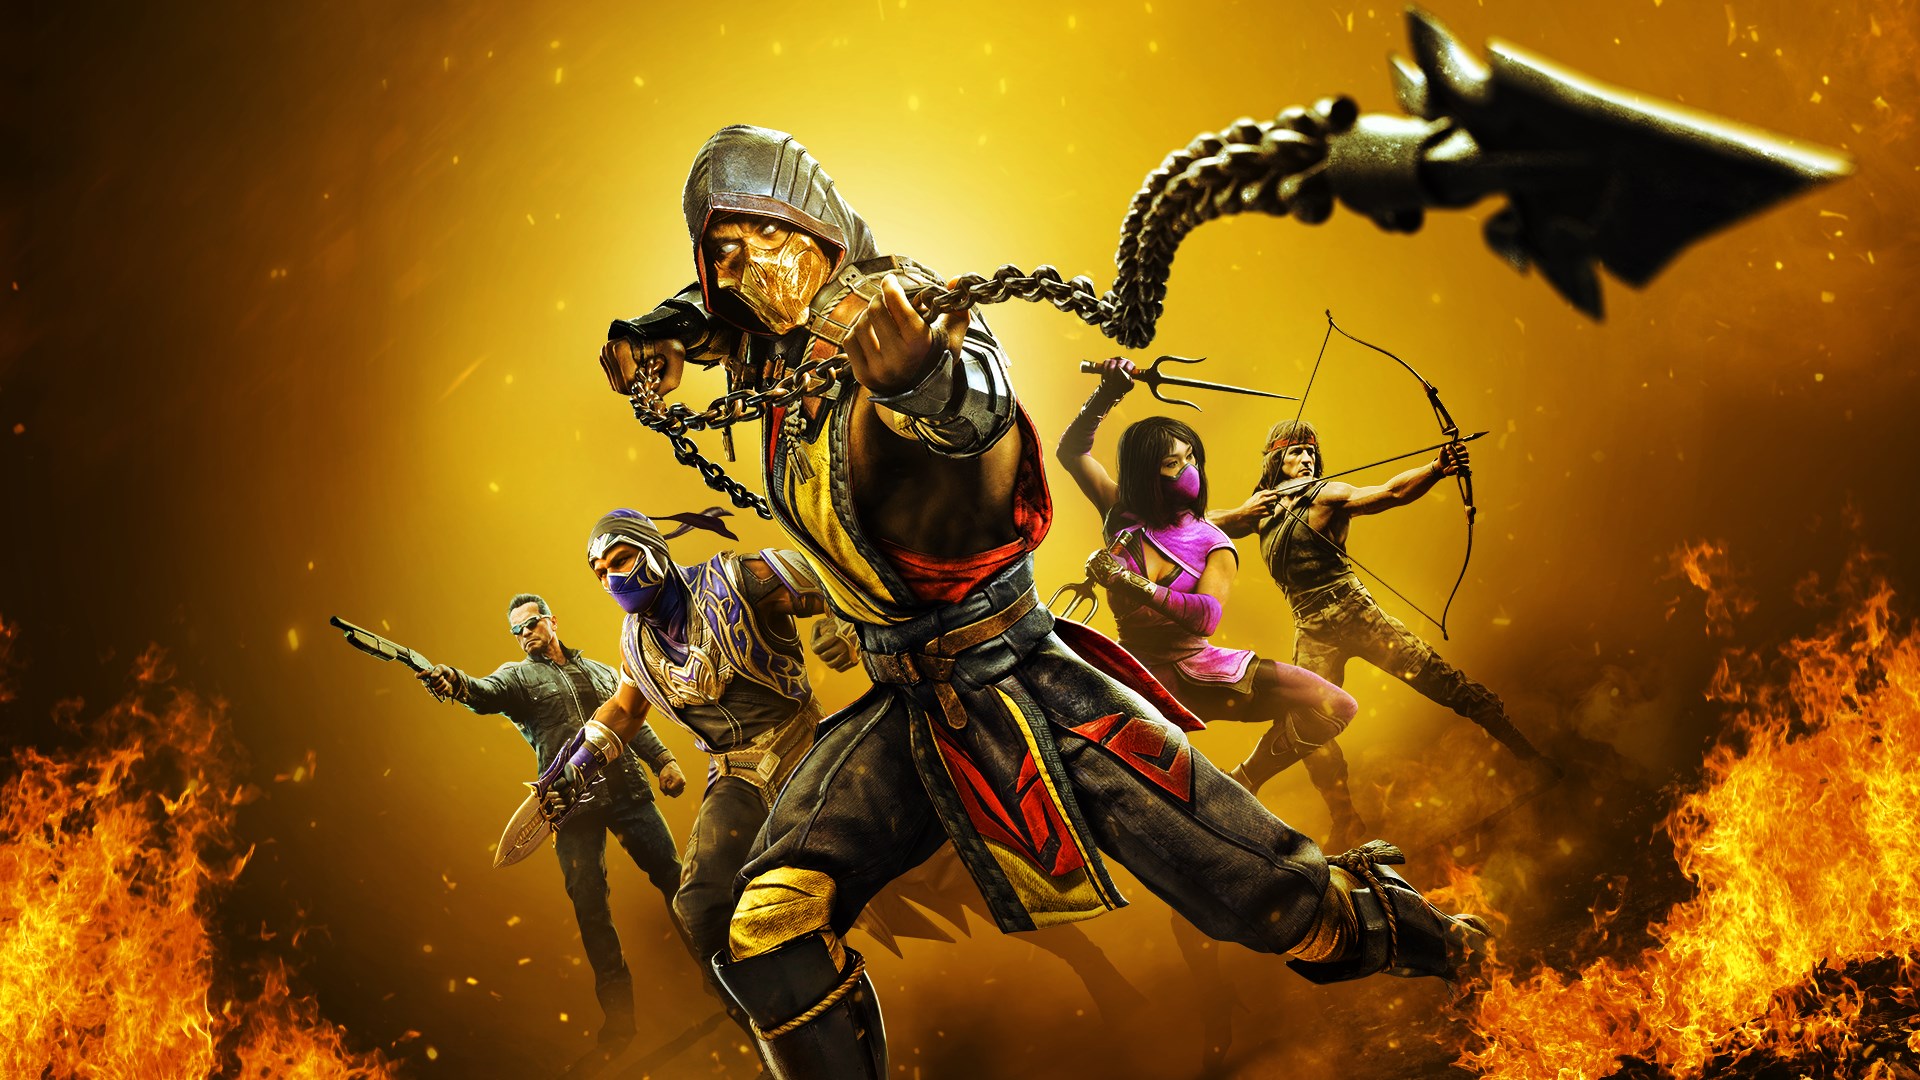 Ultimate Mortal Kombat 3 (Xbox 360 2006) - Online Multiplayer 2018 